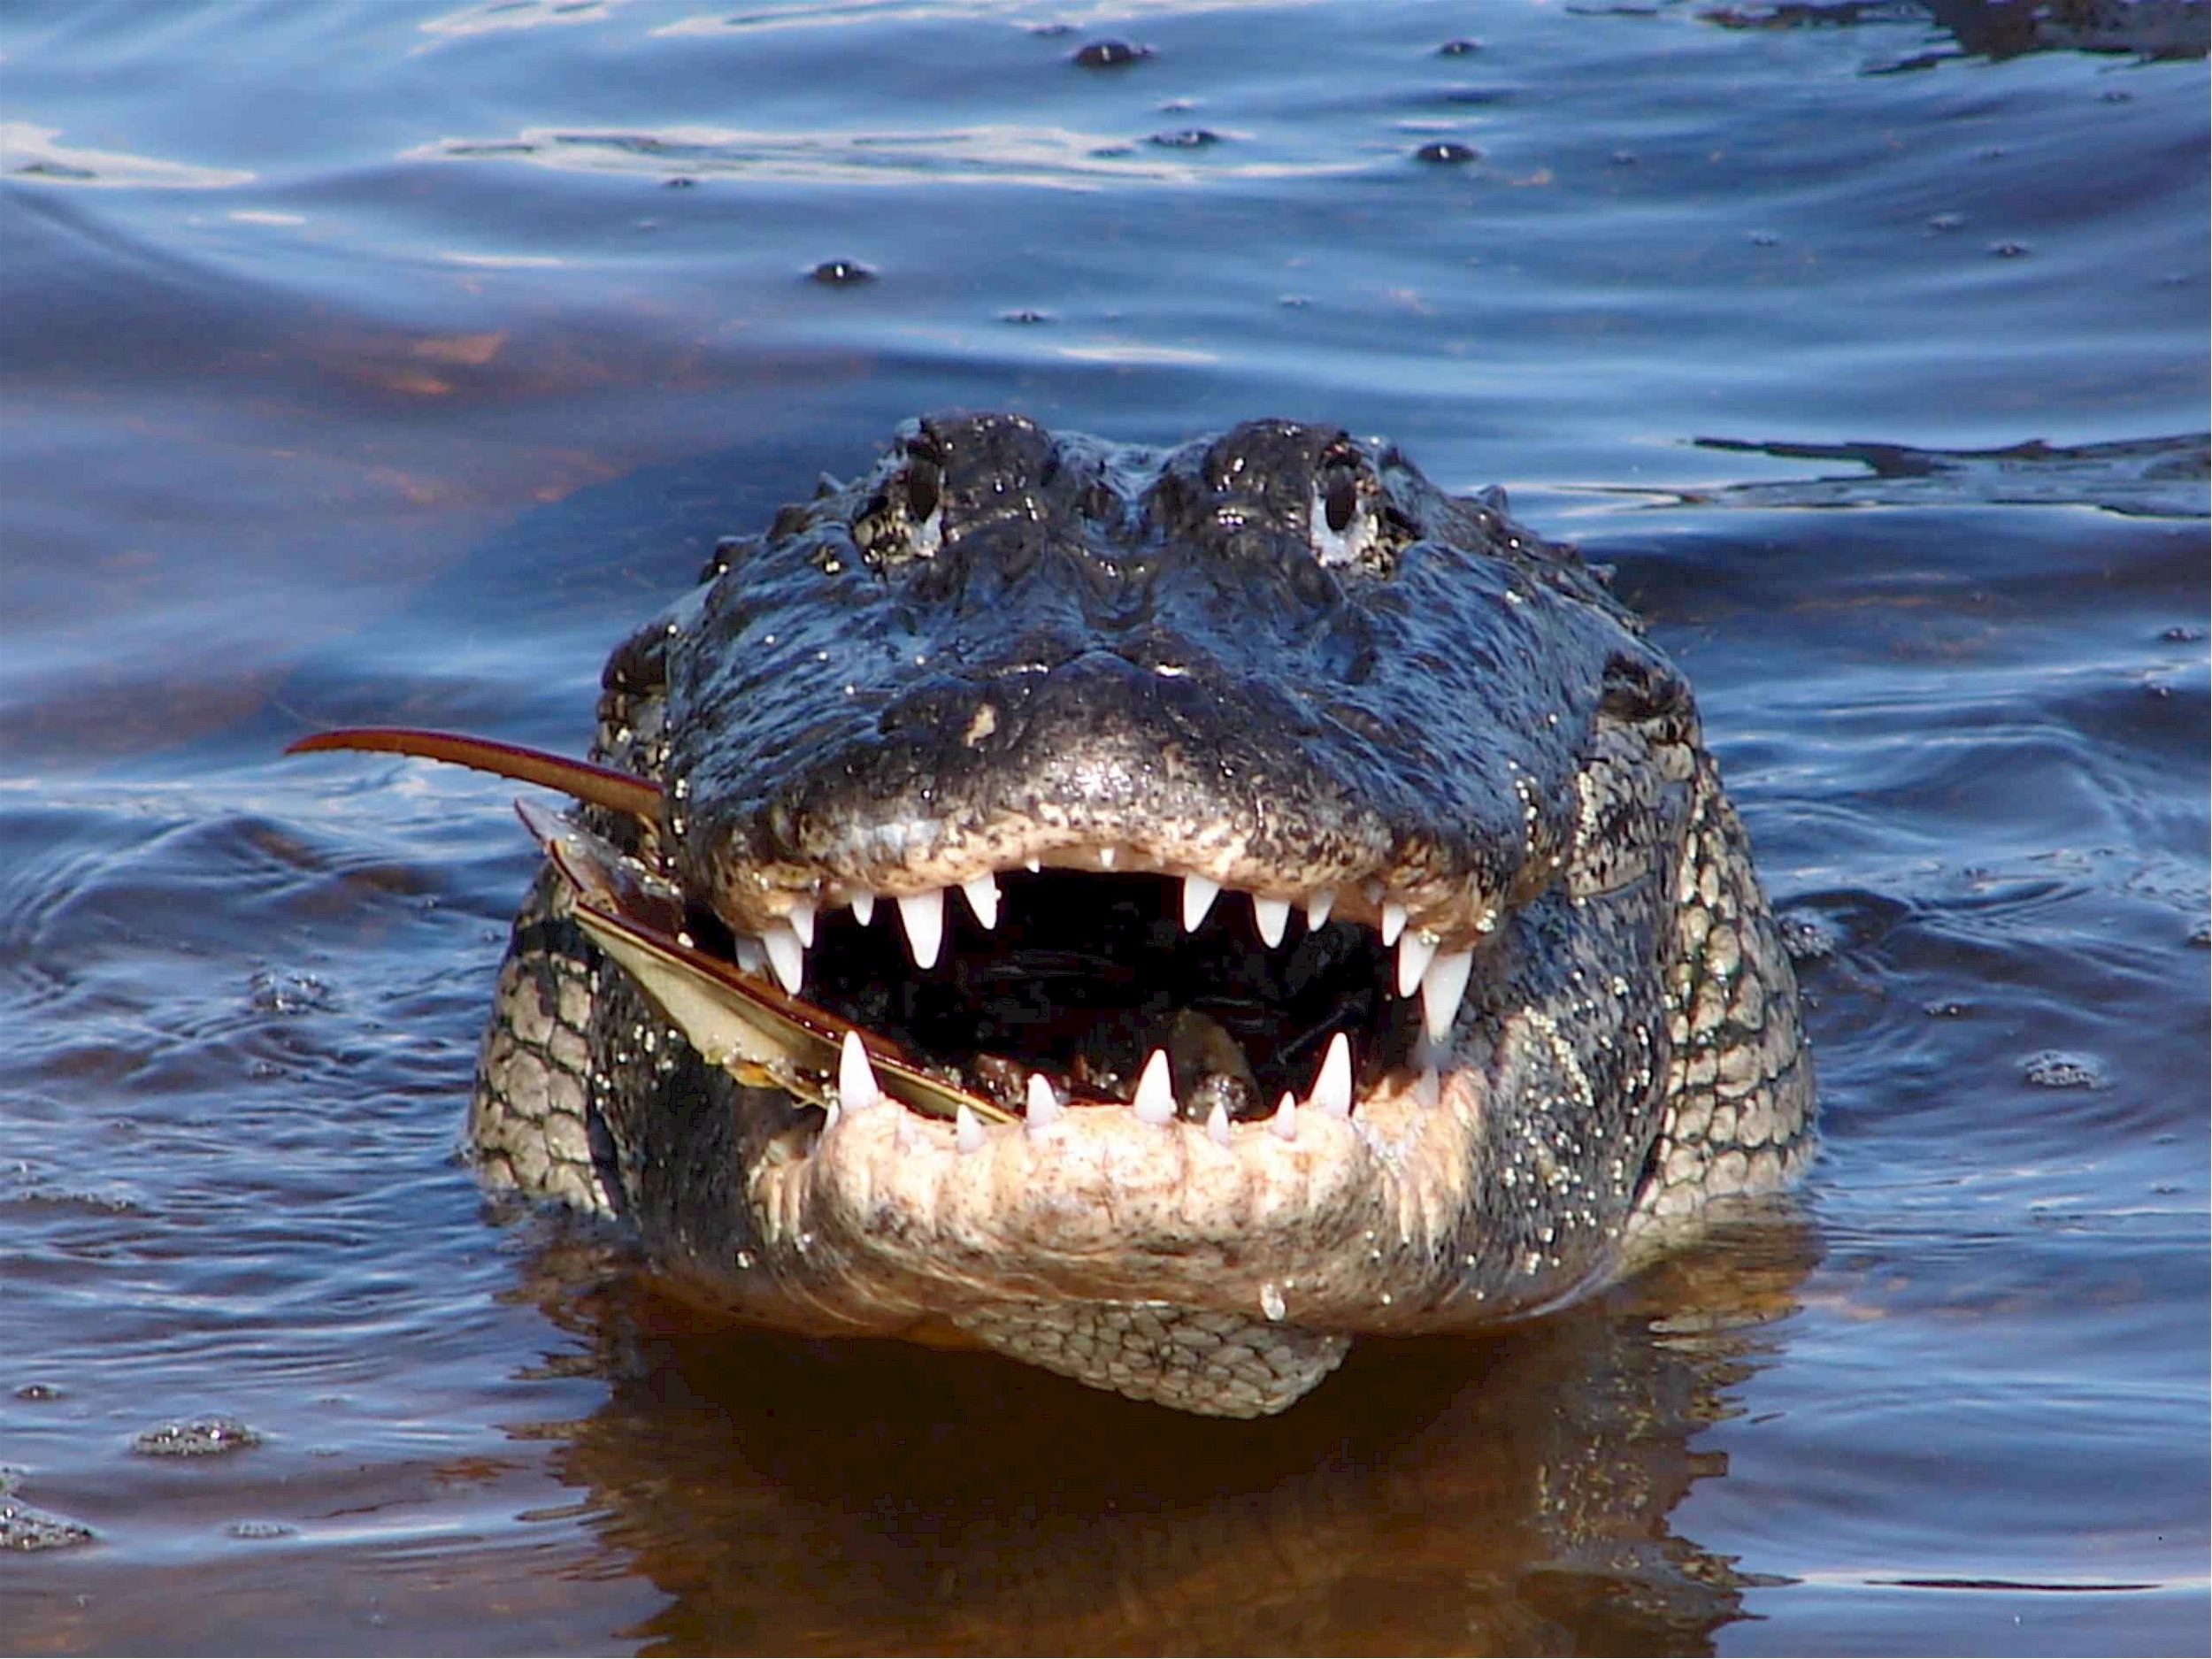 Alligator in the river photo